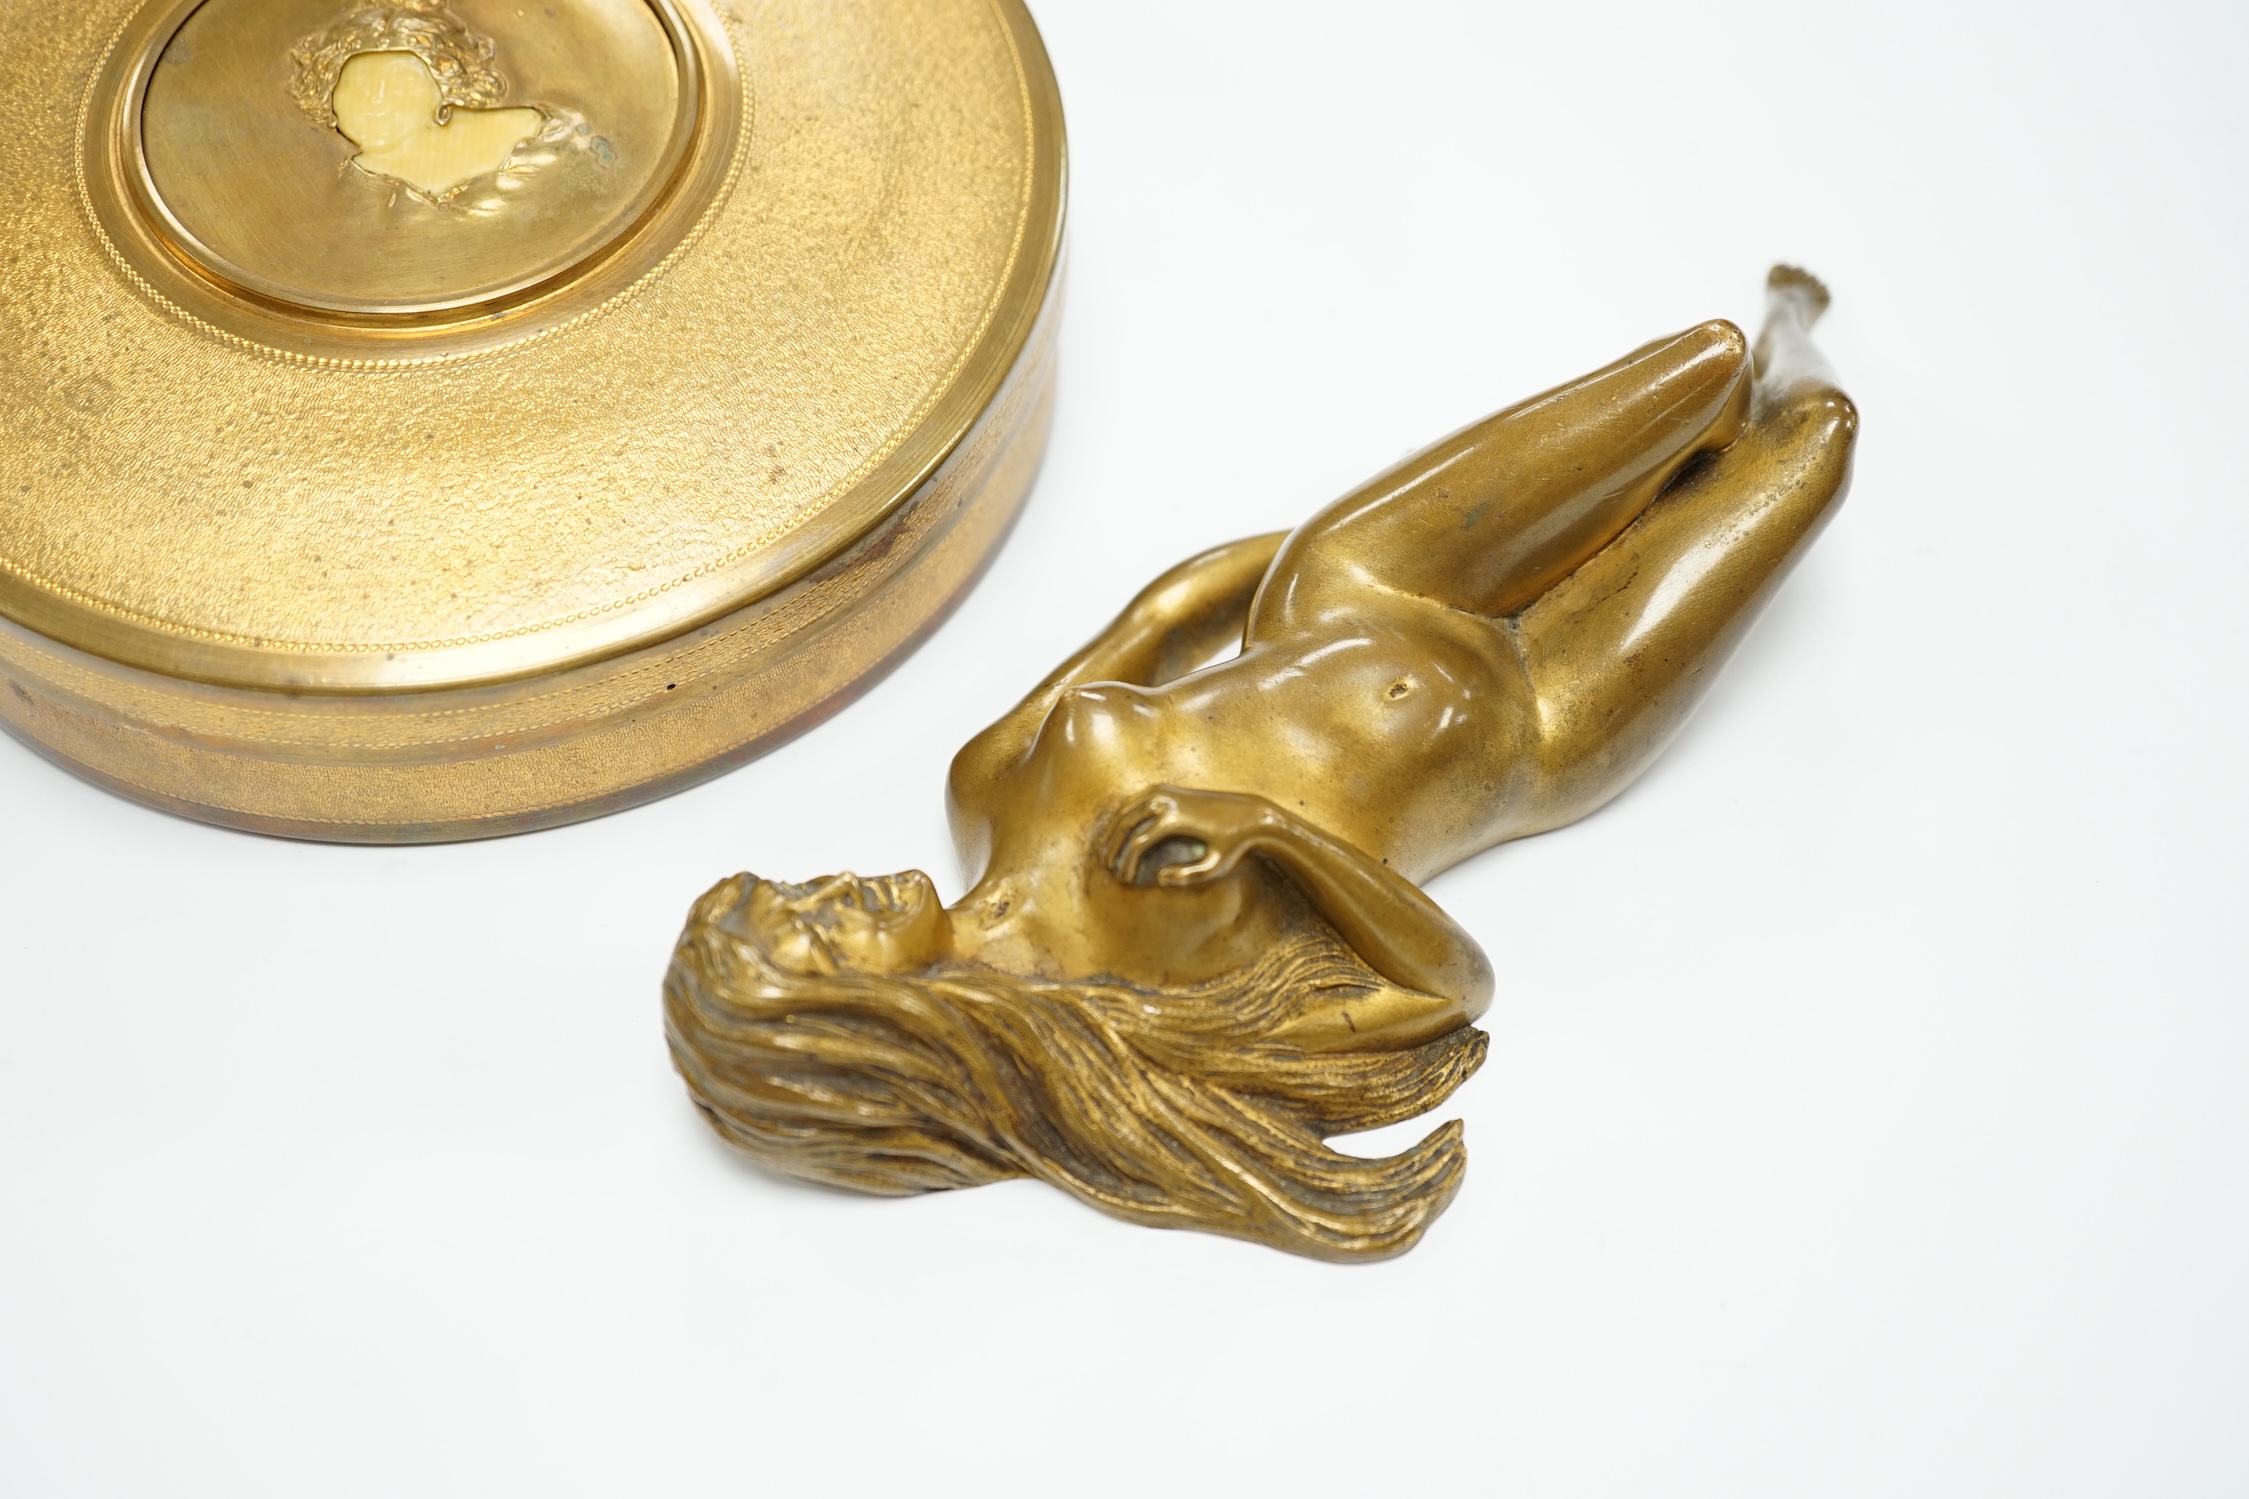 J. Boulanger, a filled bronze female nude, 19cm wide, and an ormolu circular casket, 15.5cm diameter